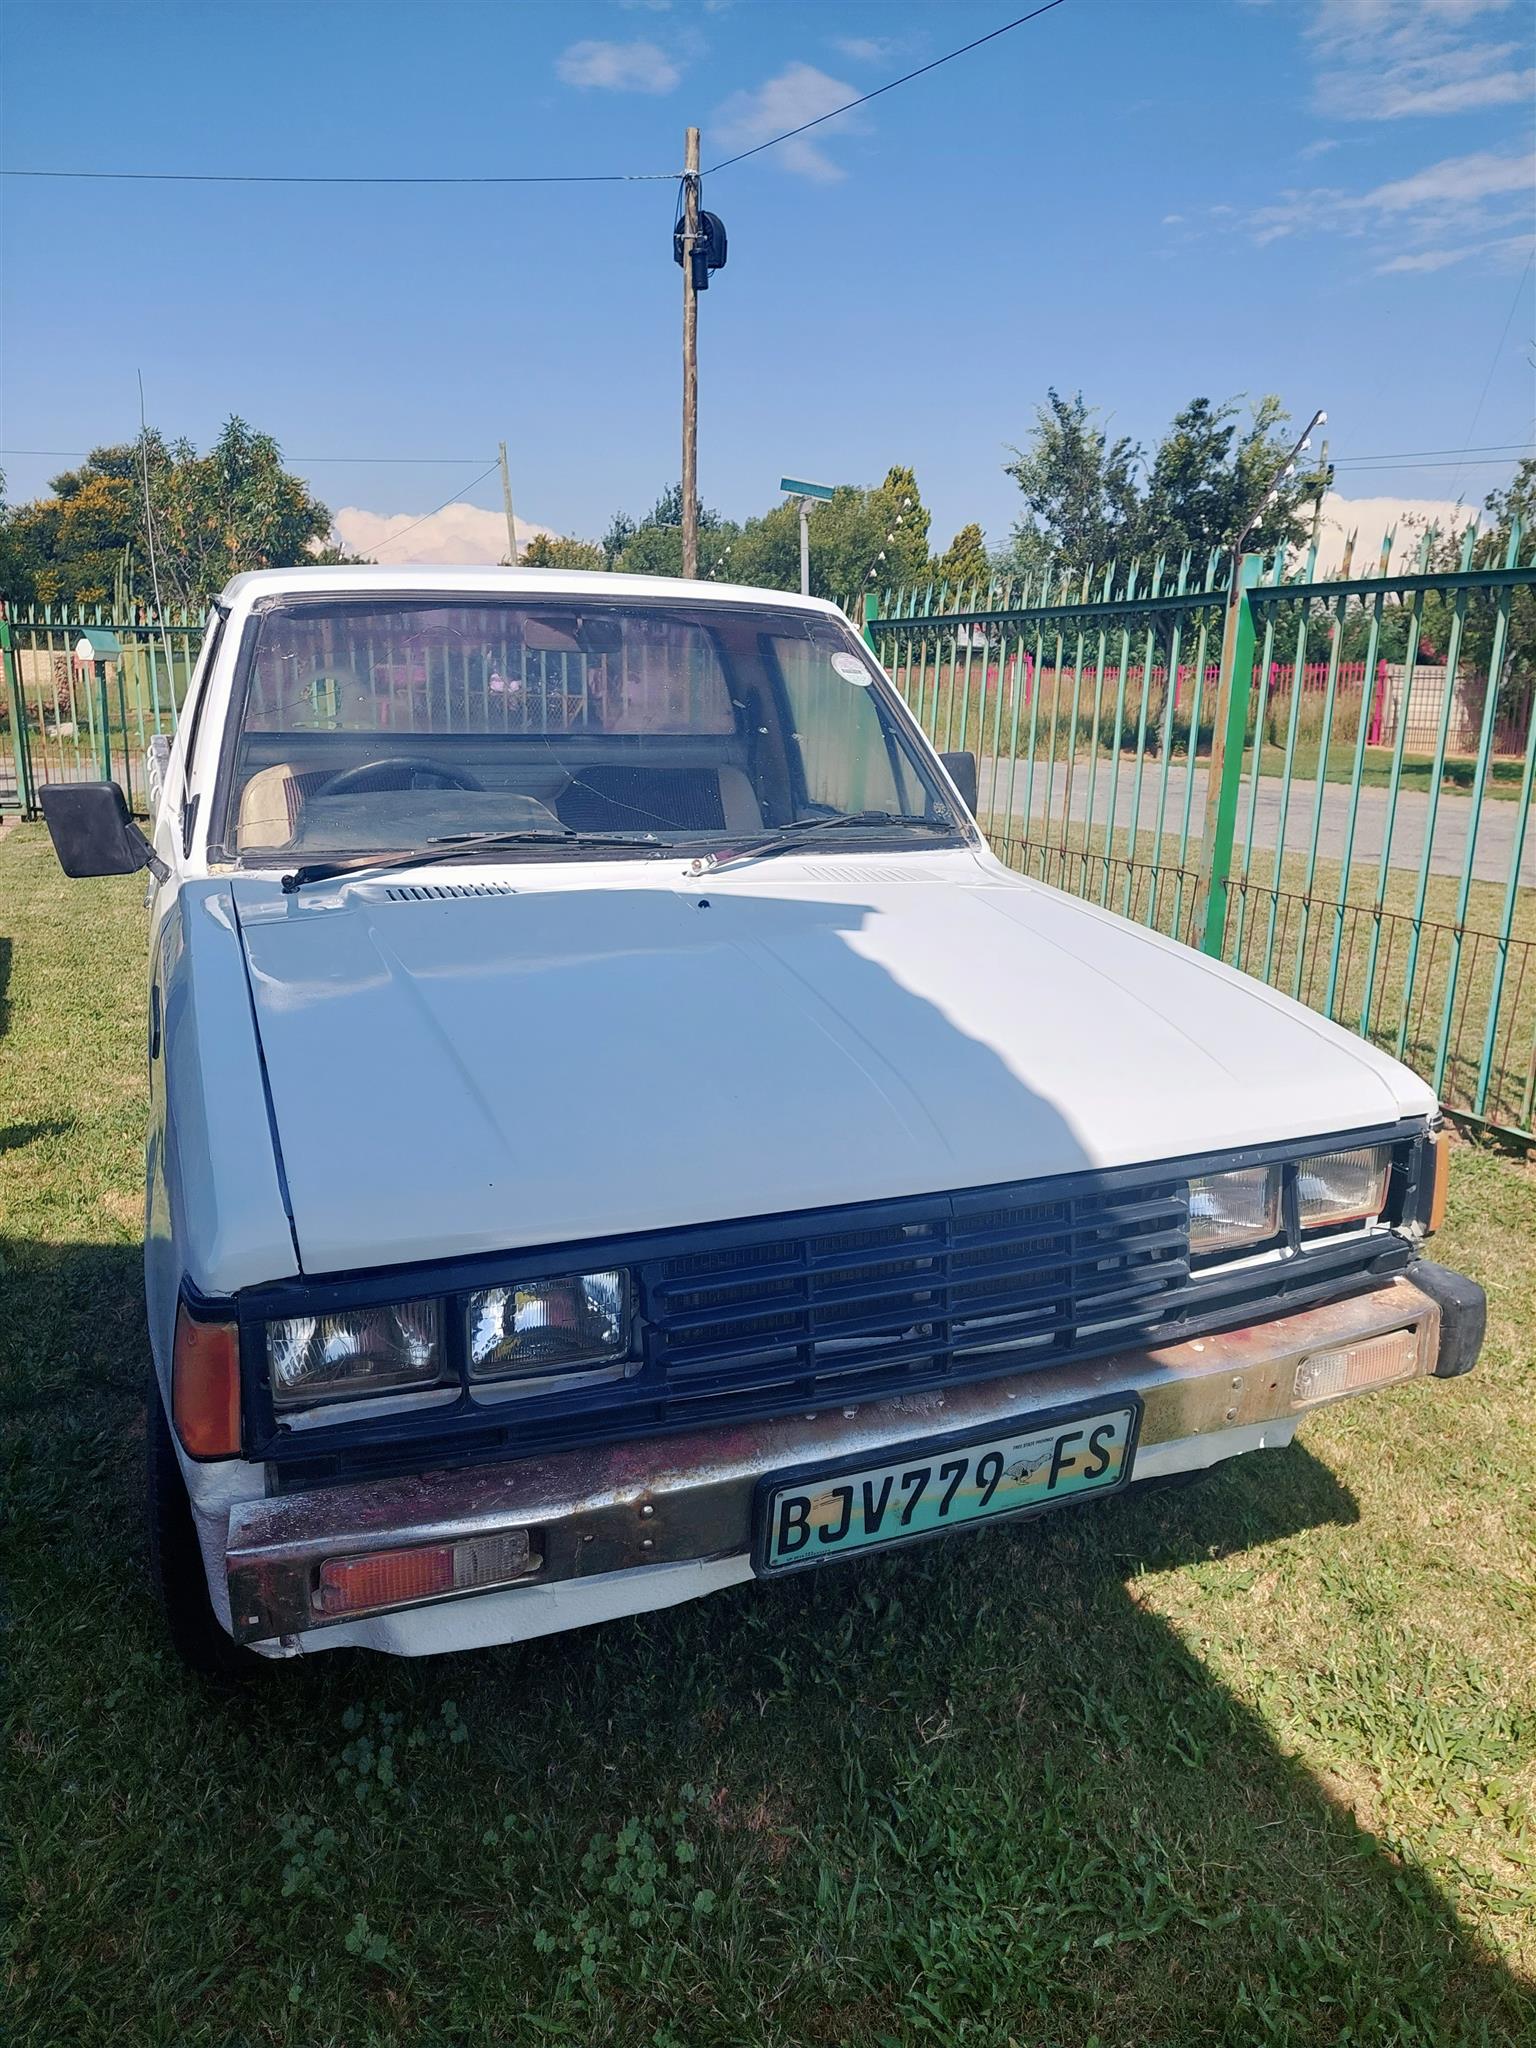 Datsun 1800 bakkie,white,1990 year model, manual transmission, petrol